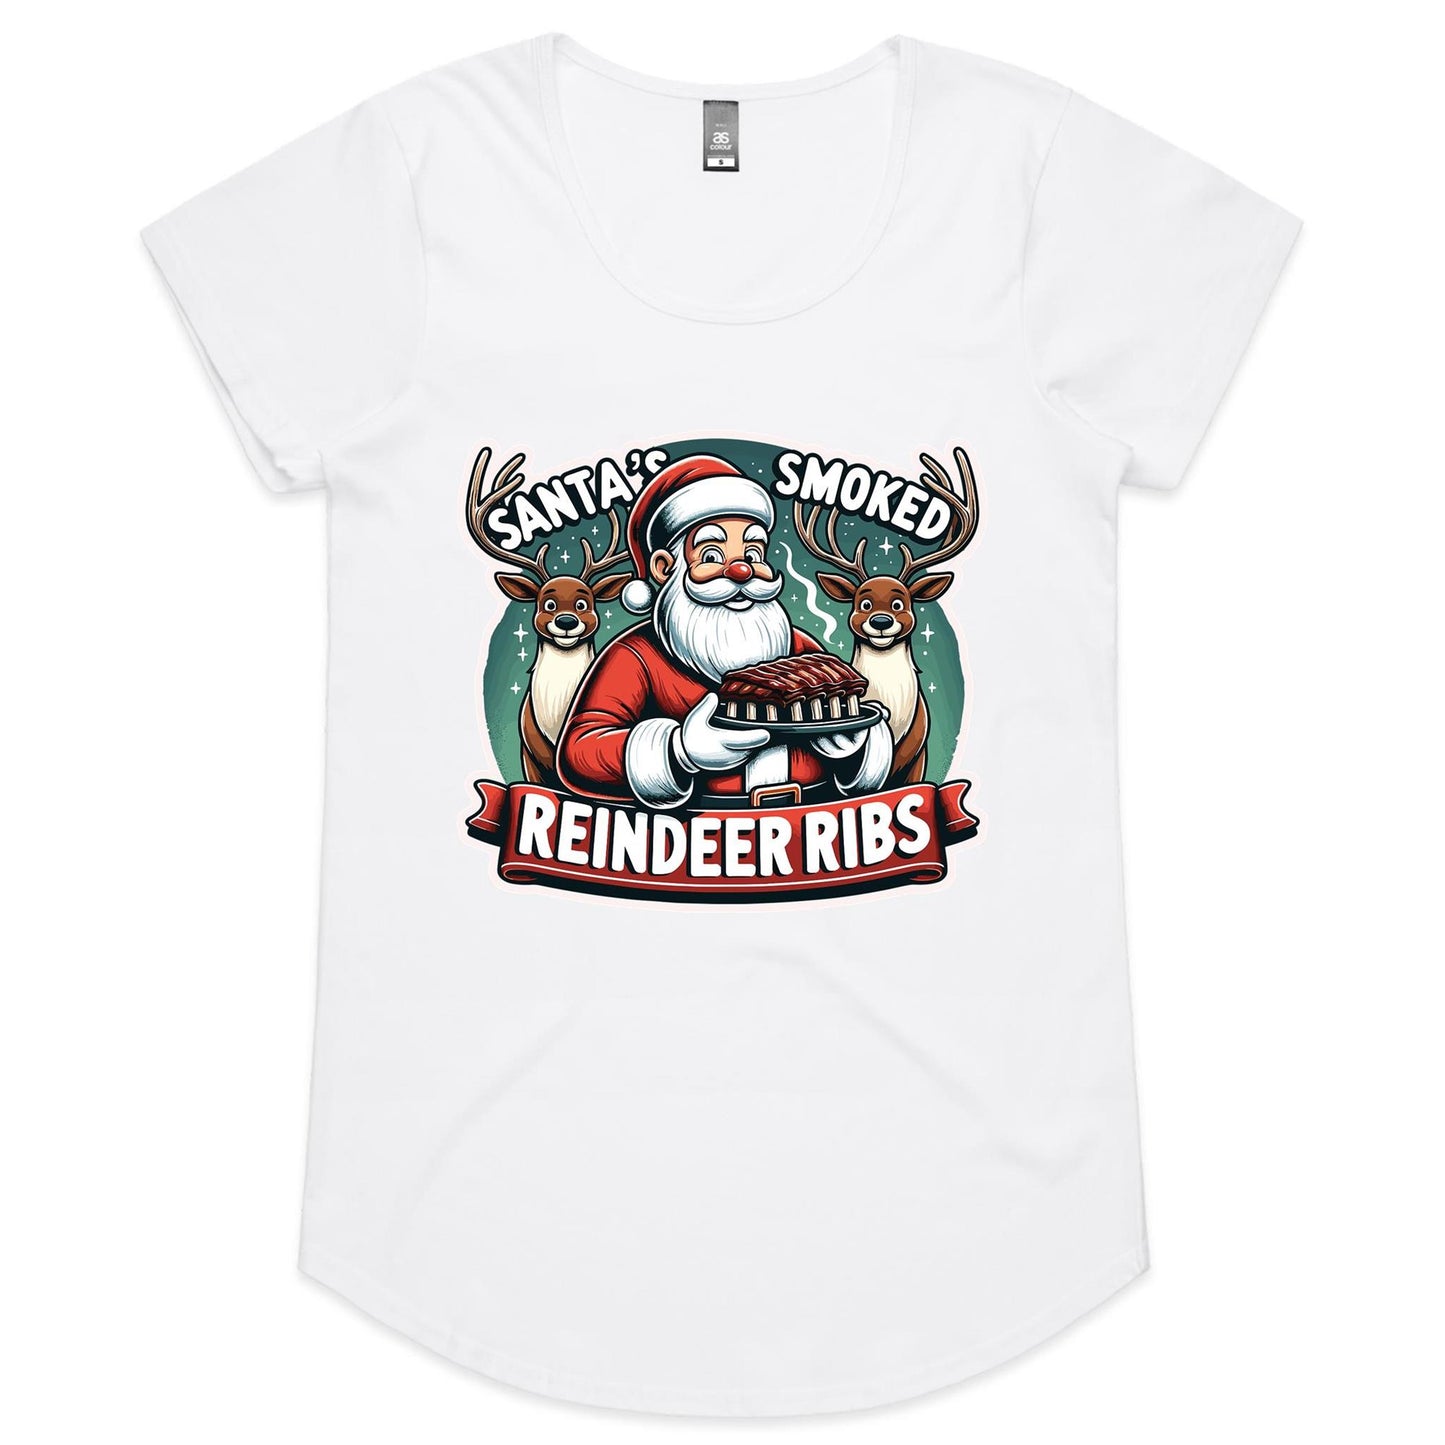 Santas Smoke Reindeer Ribs Xmas Day - Womens Scoop Neck T-Shirt